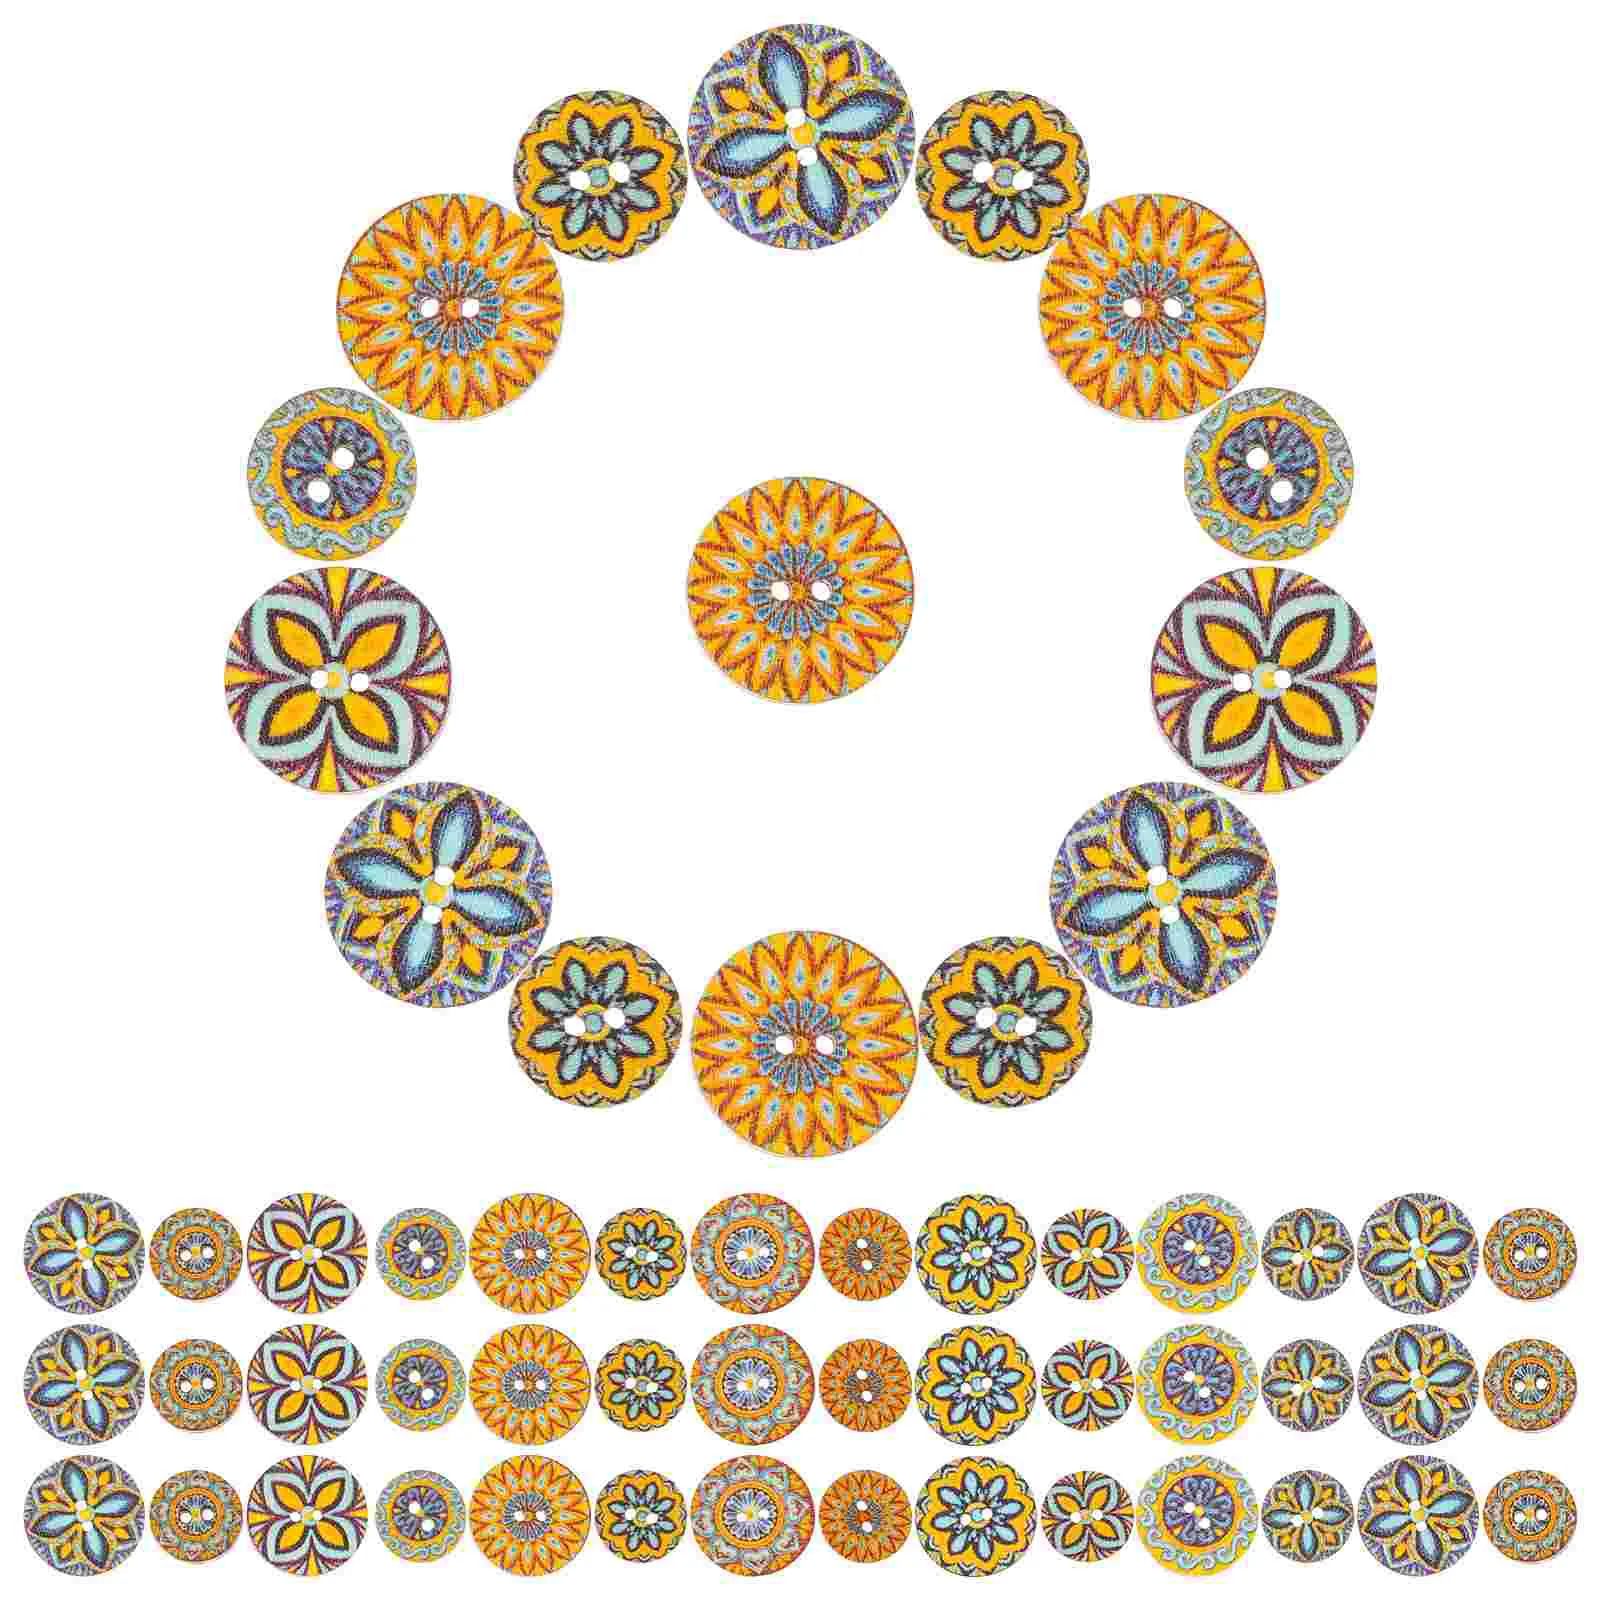 

200pcs Flower Pattern Wooden Buttons Bohemian Flower Painting Buttons DIY Craft Embellishments